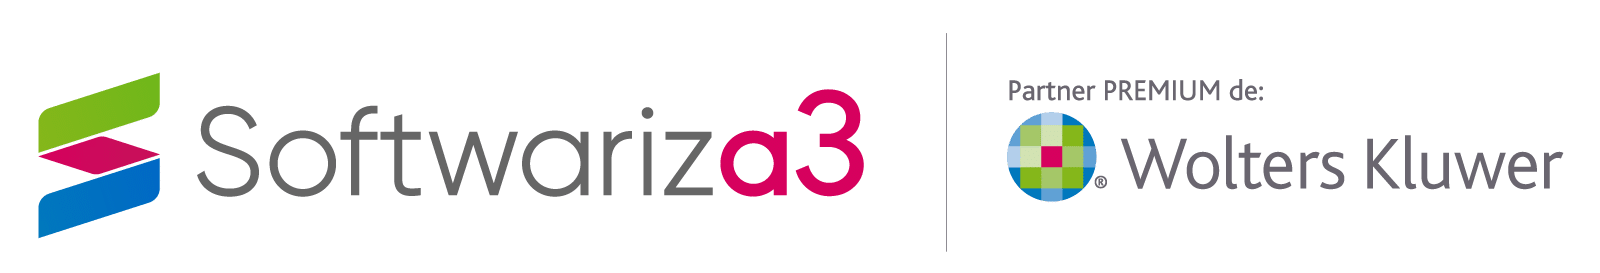 Logo-Softwariza3-Premium-Horizontal